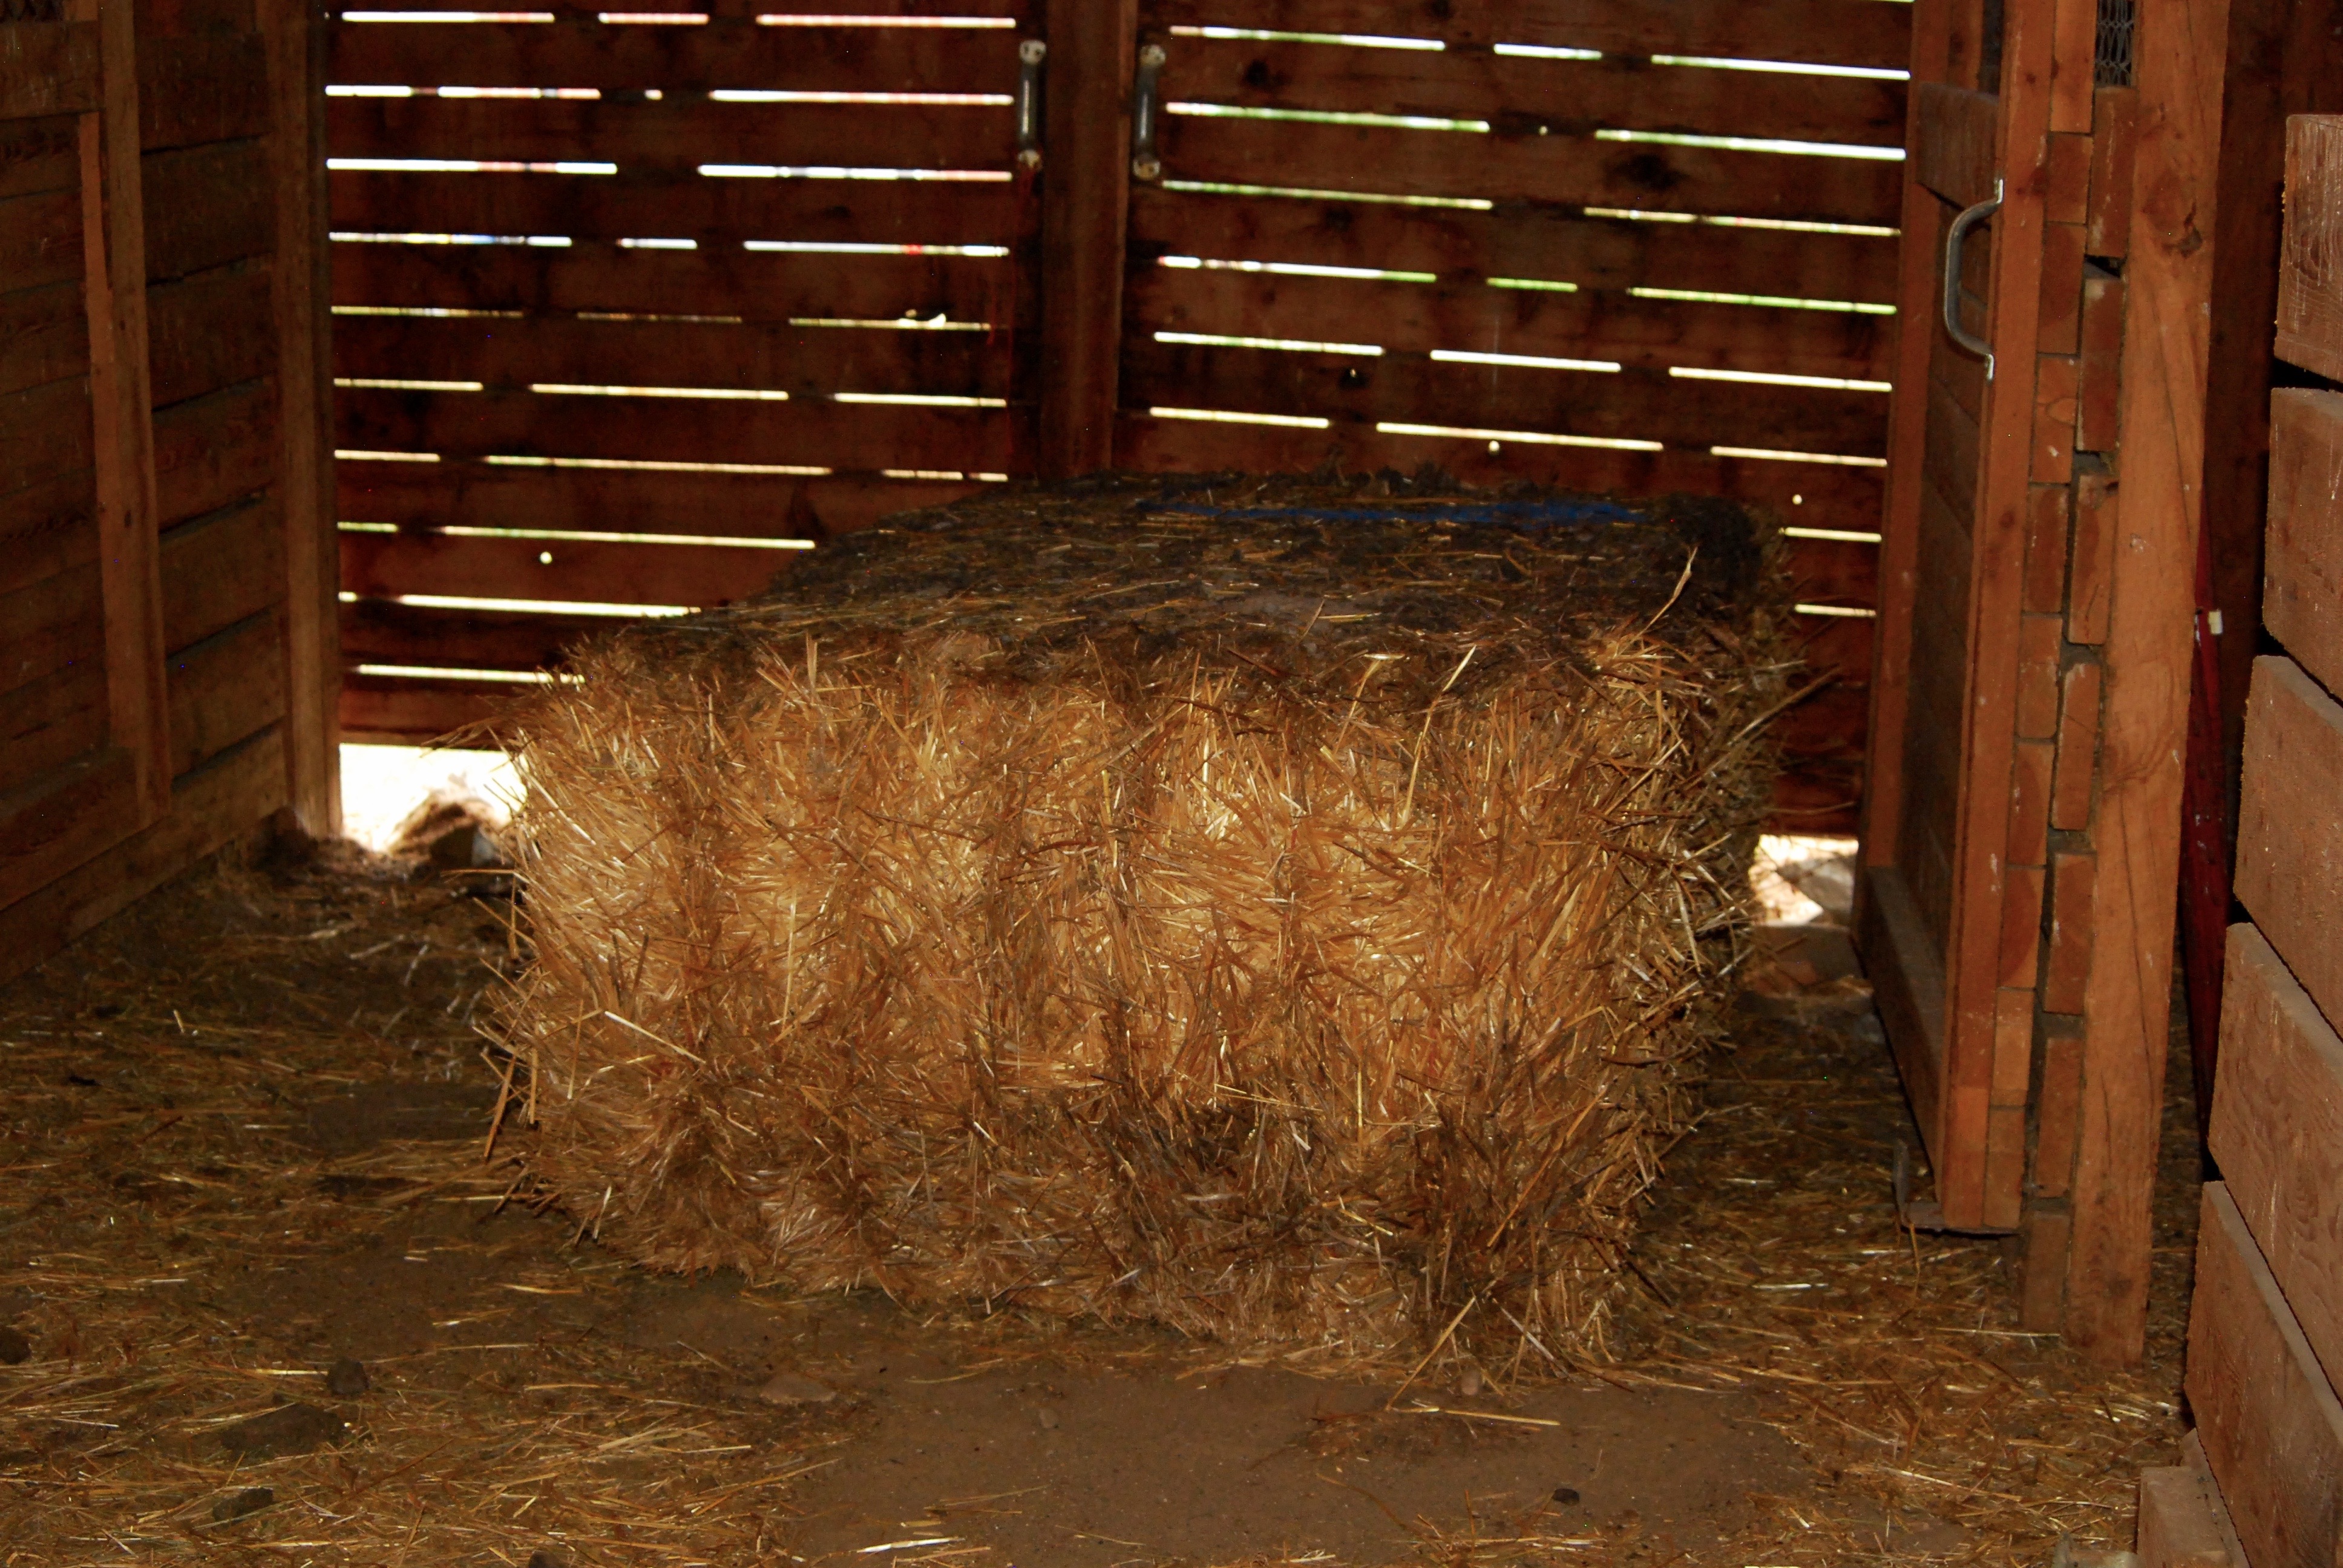 Straw bale in the barn isle